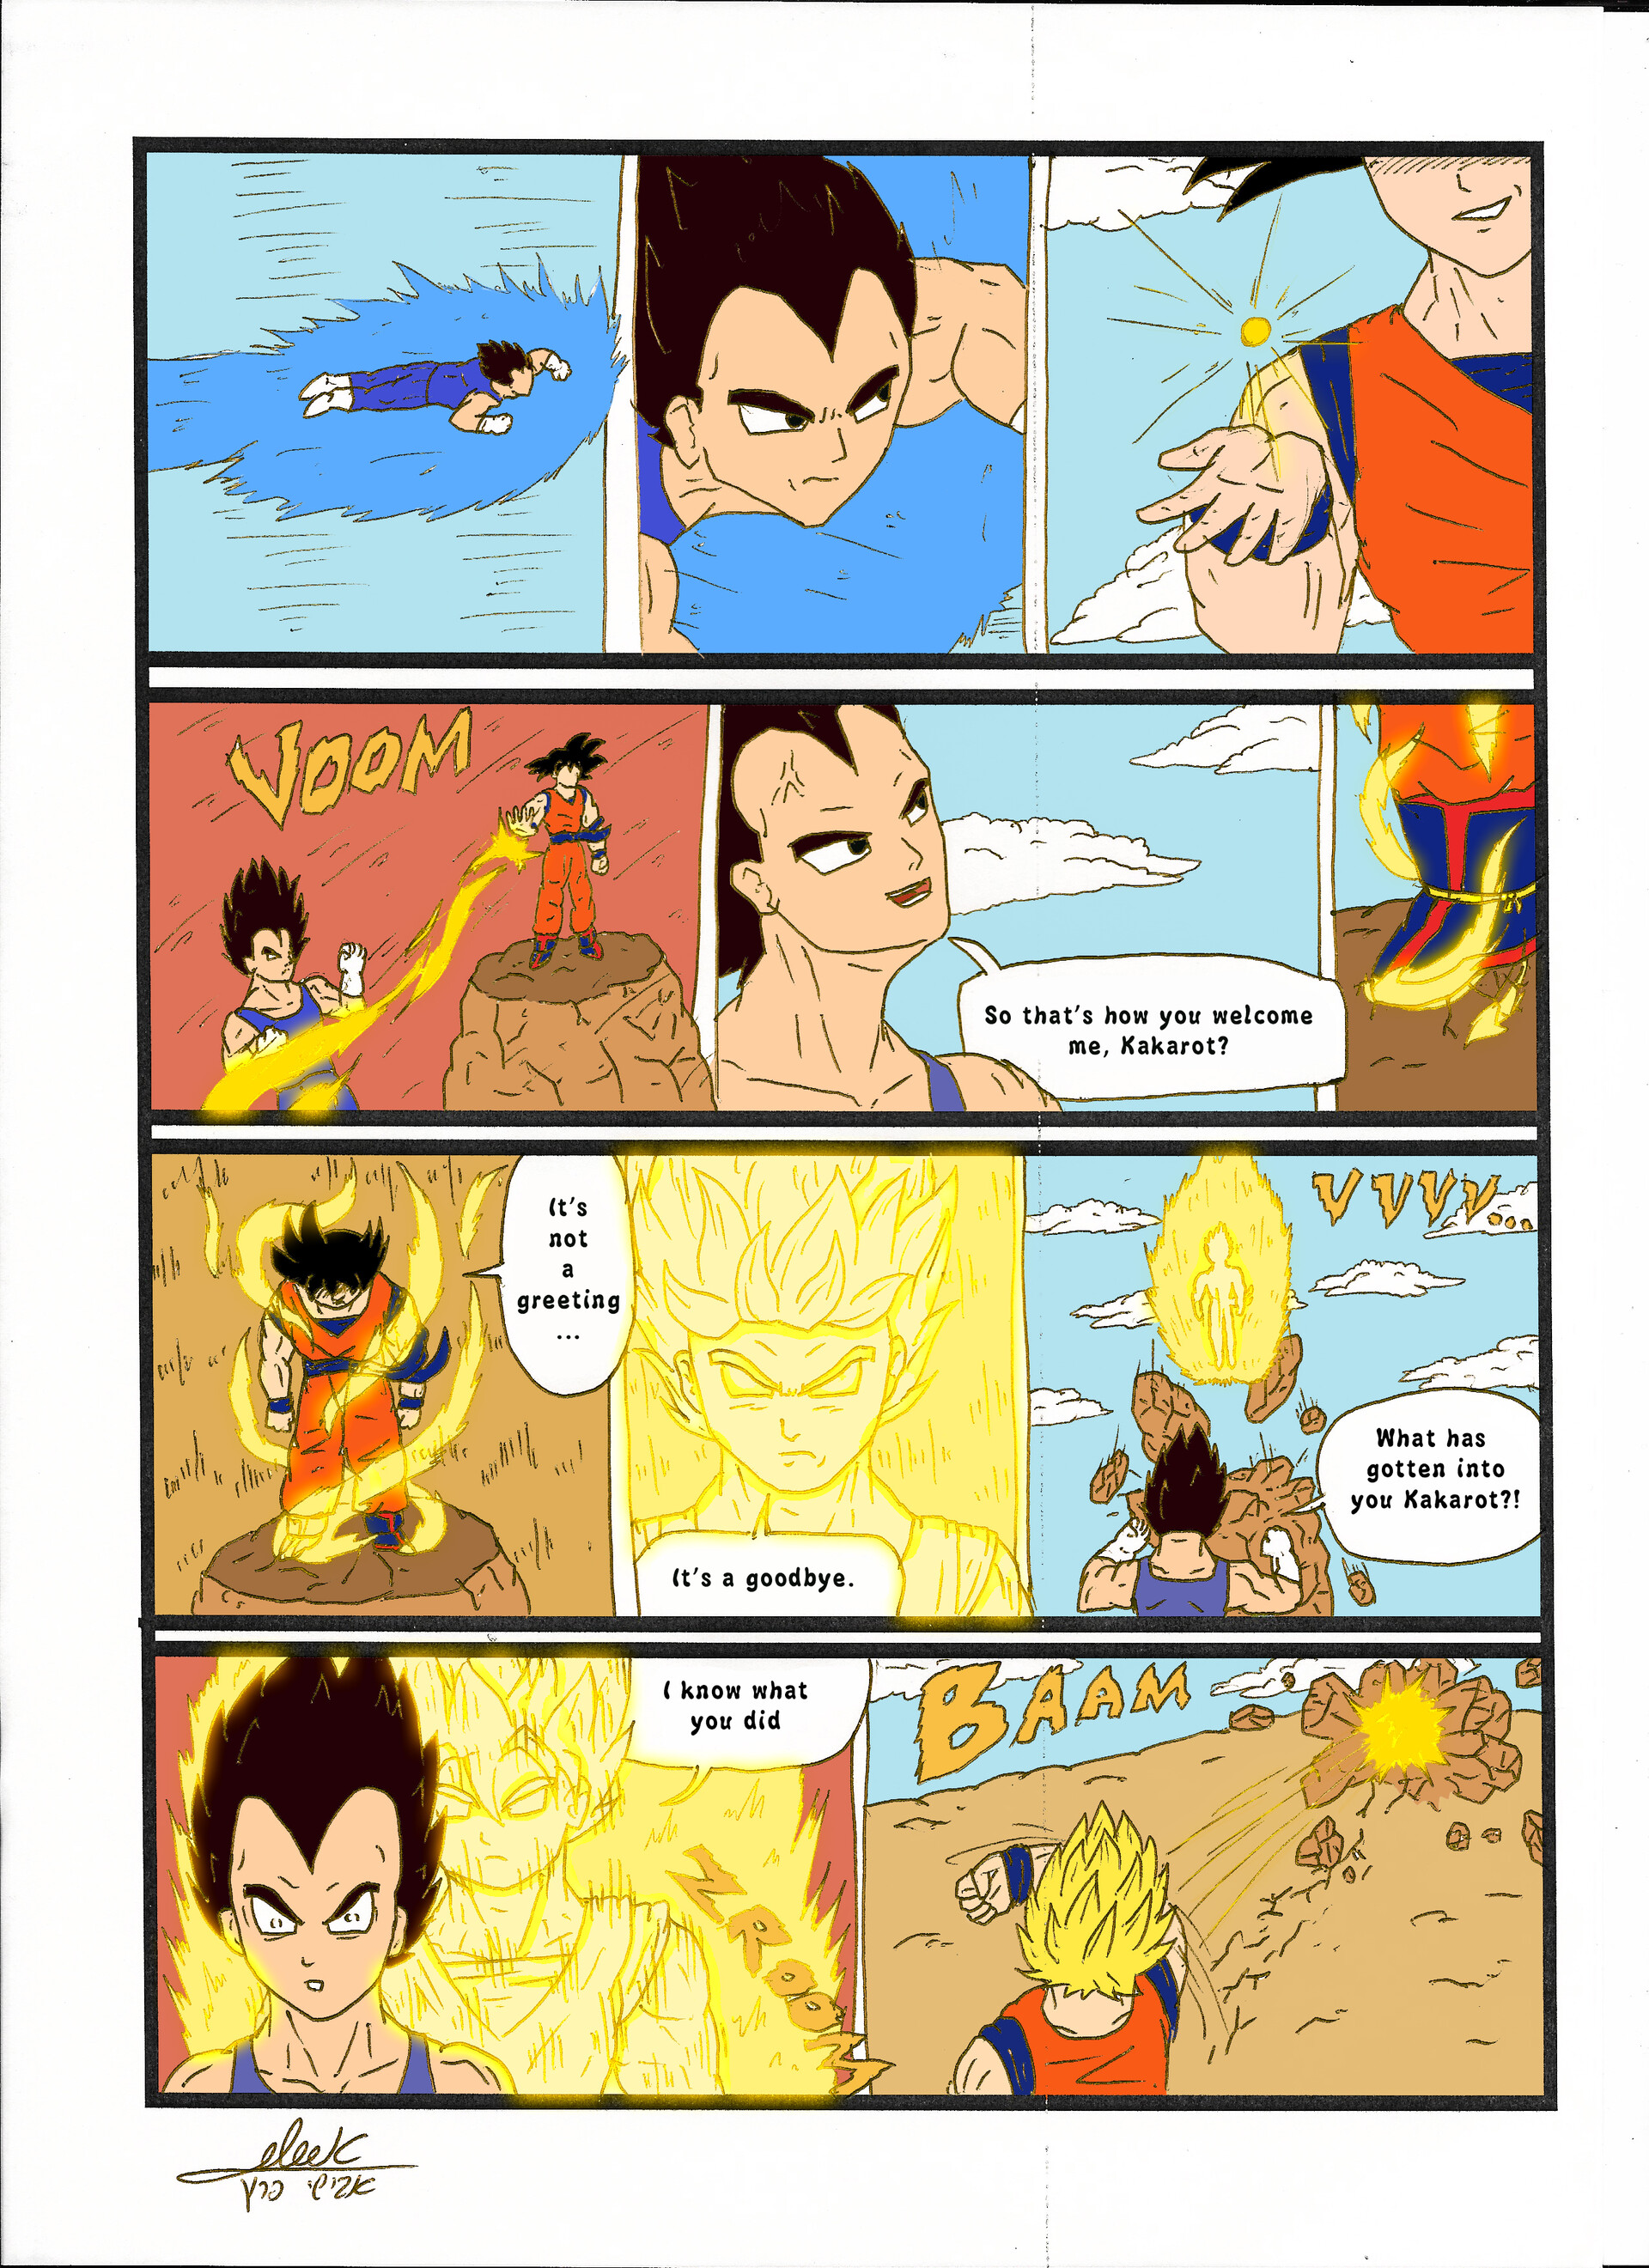 Best 'Dragon Ball' Drawings by Manga Artists | Hypebeast